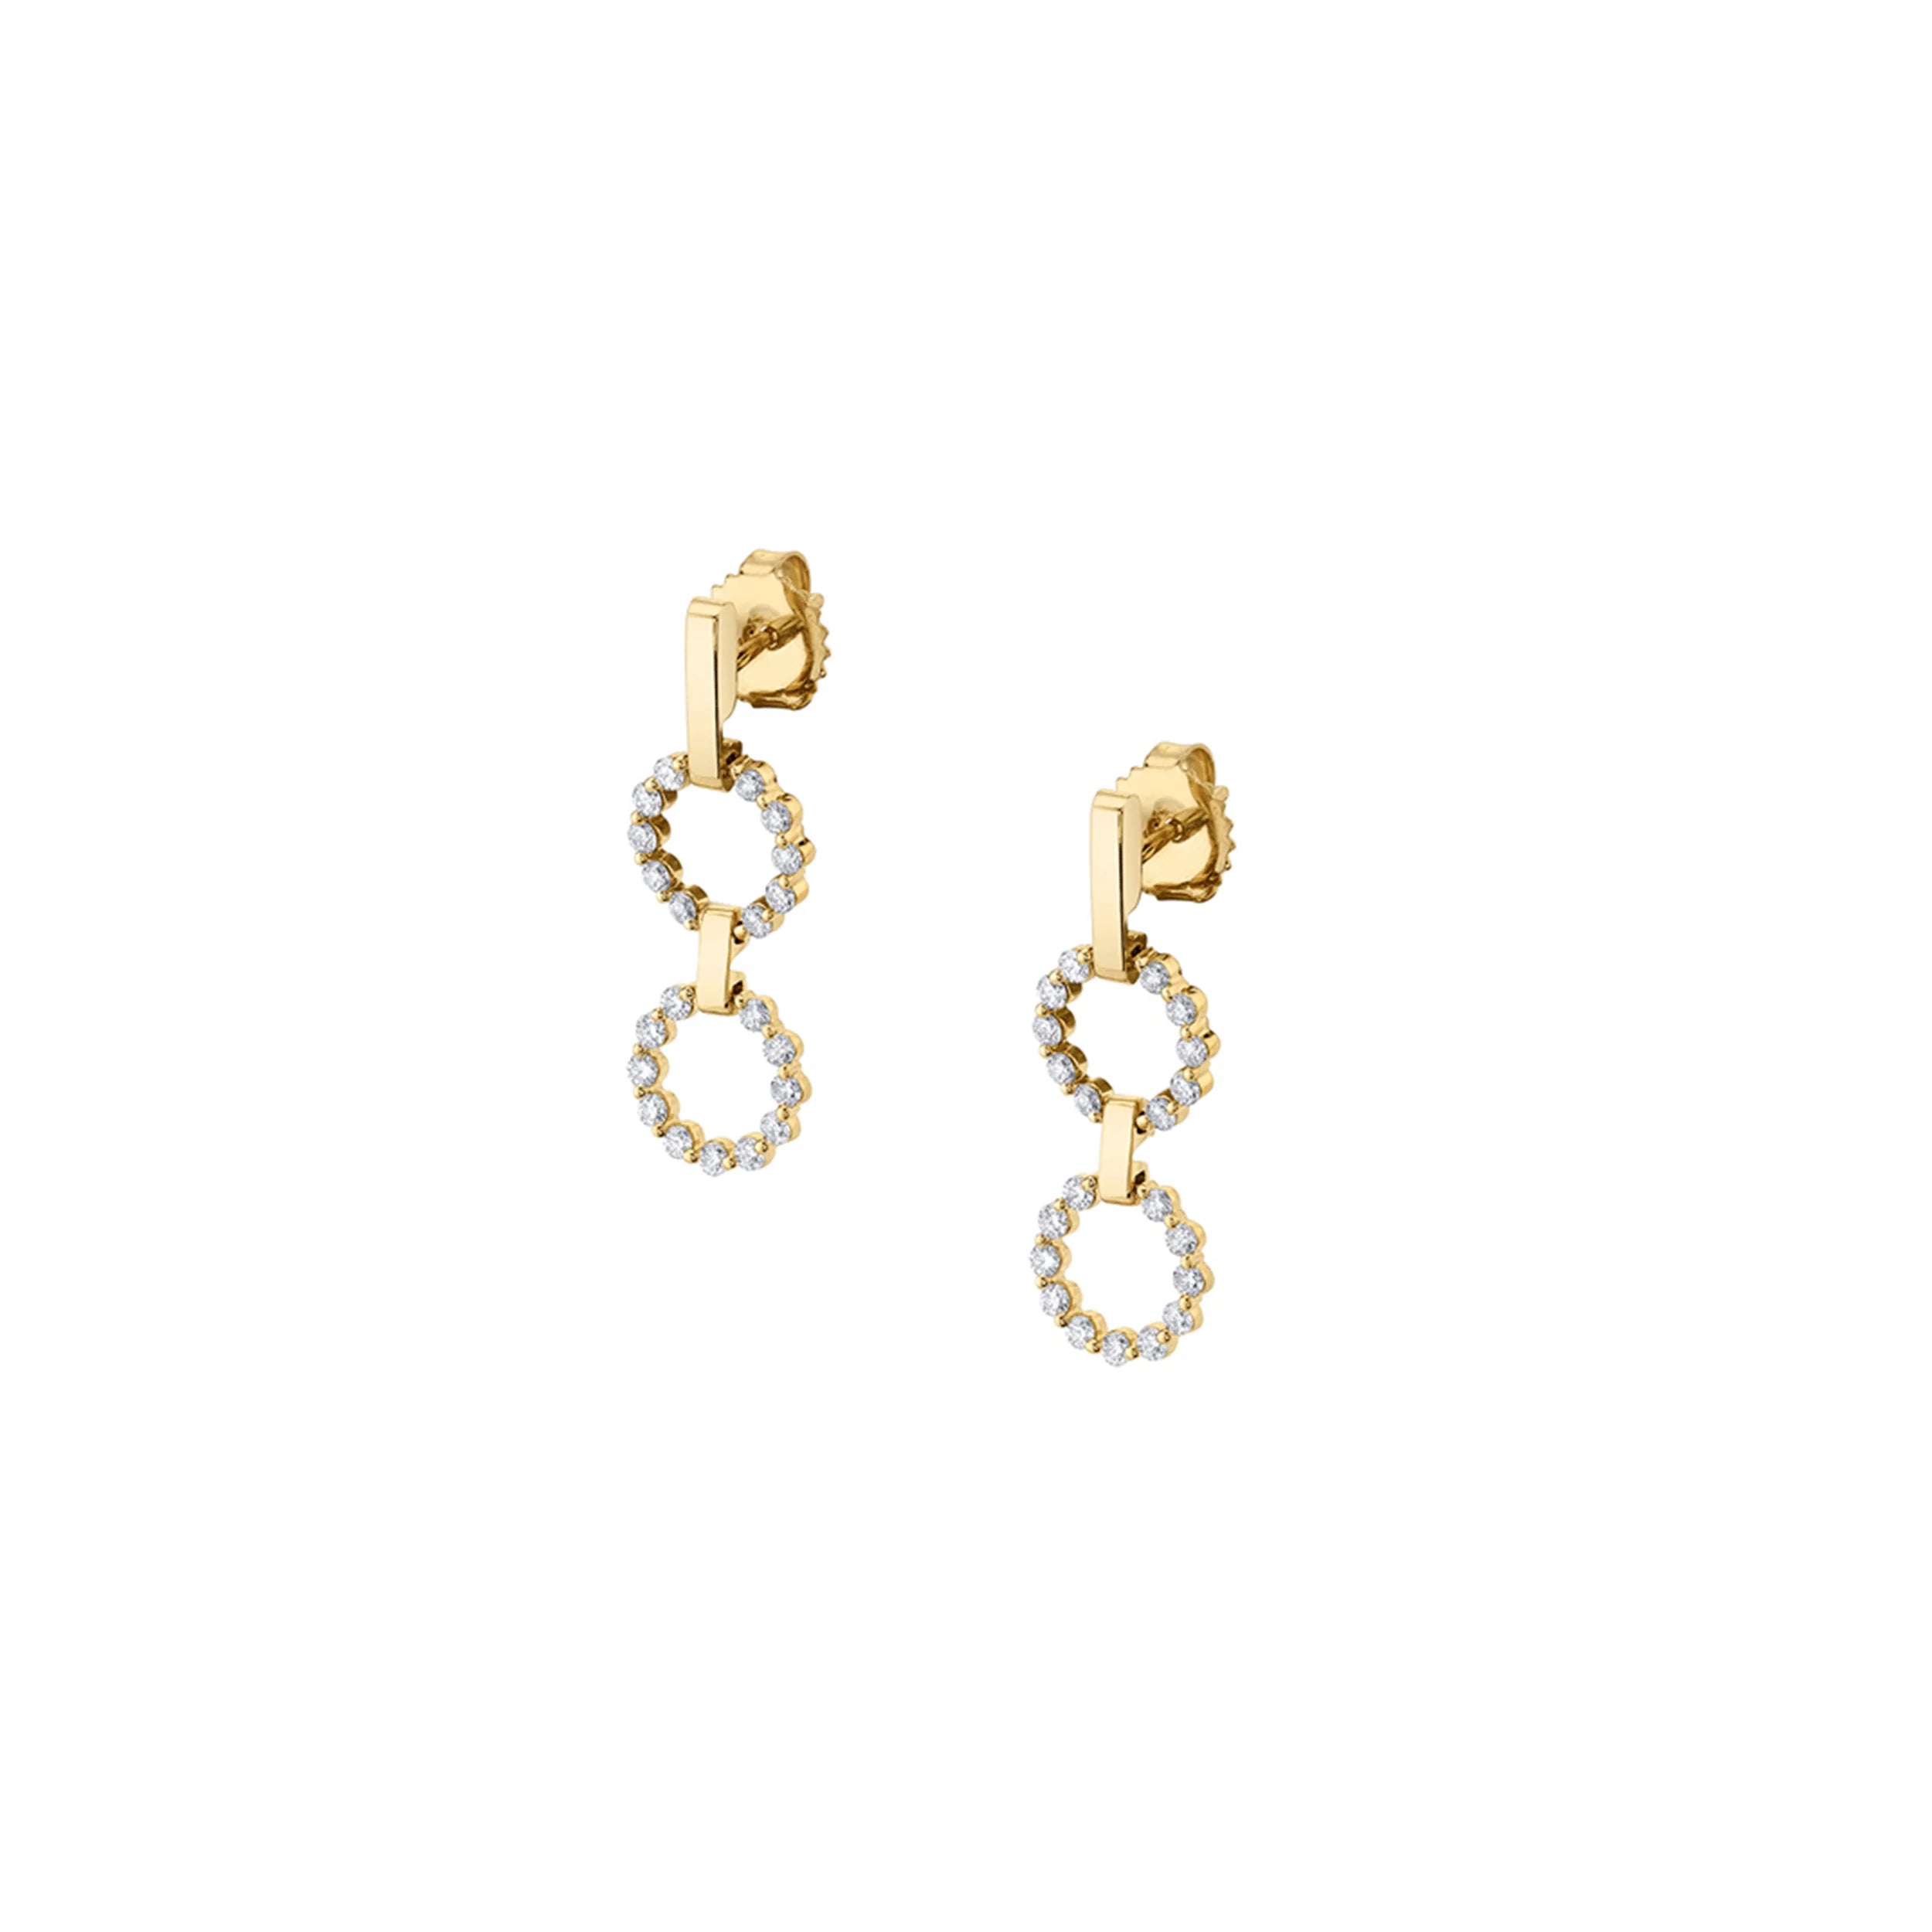 MICHAEL M Earrings 14K Yellow Gold Two Ring Cloud Drop Earrings ER385-S